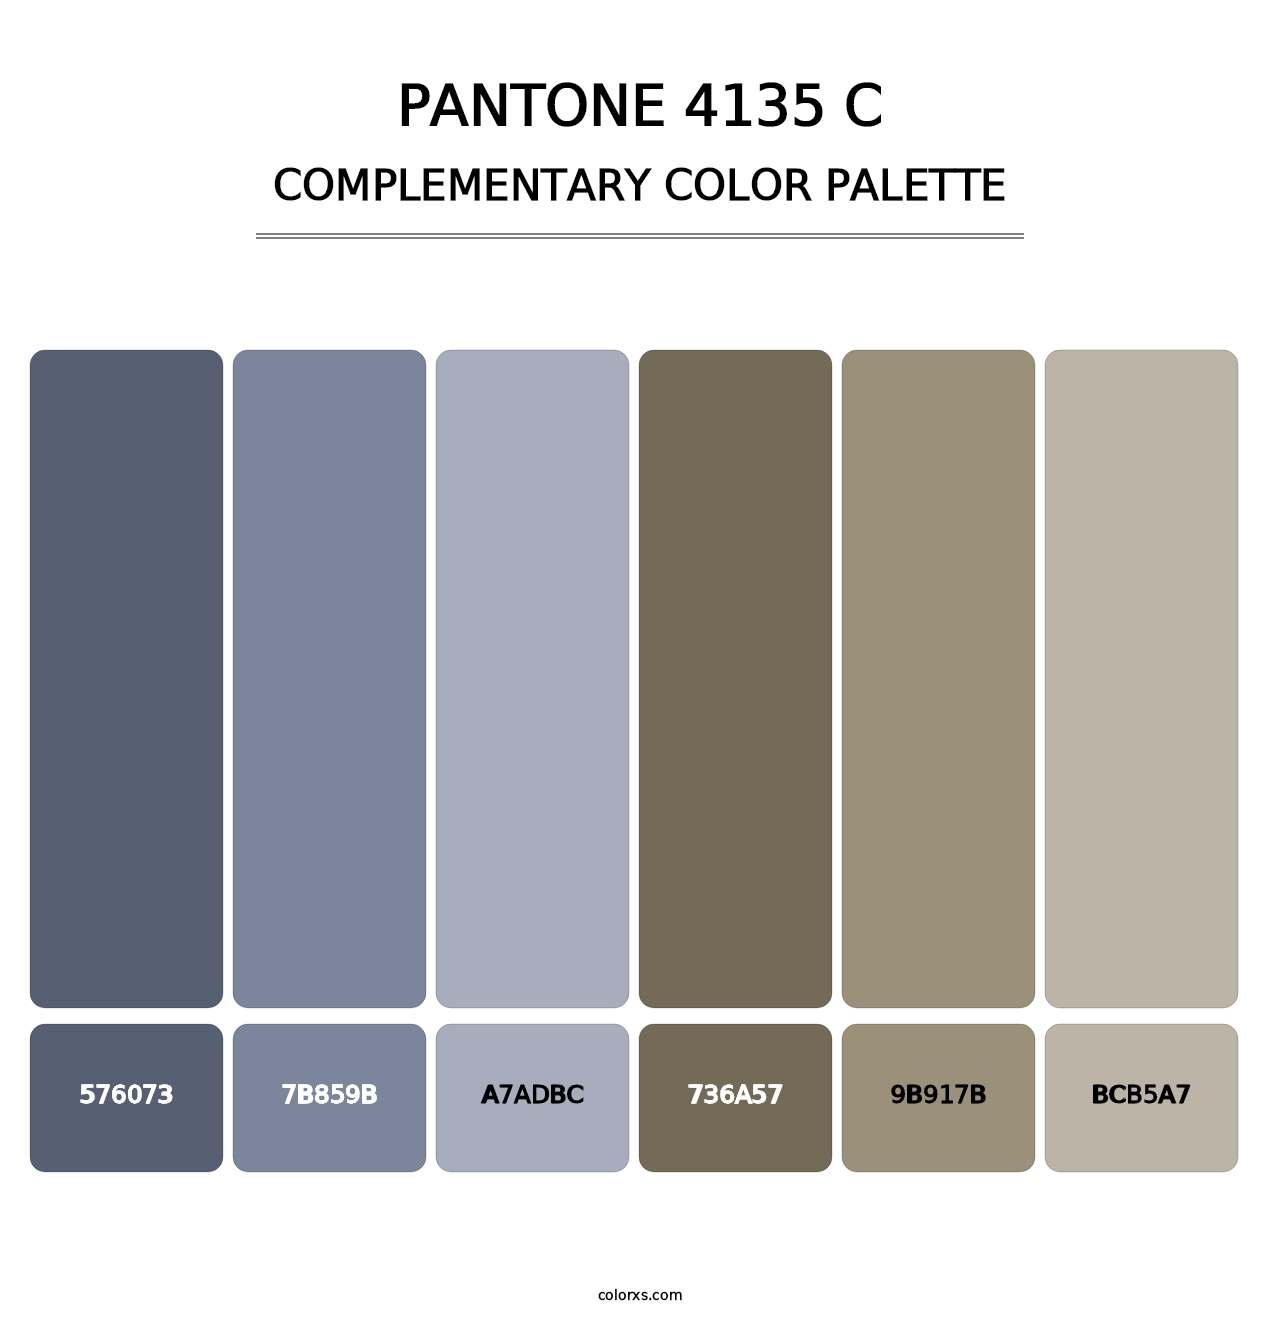 PANTONE 4135 C - Complementary Color Palette